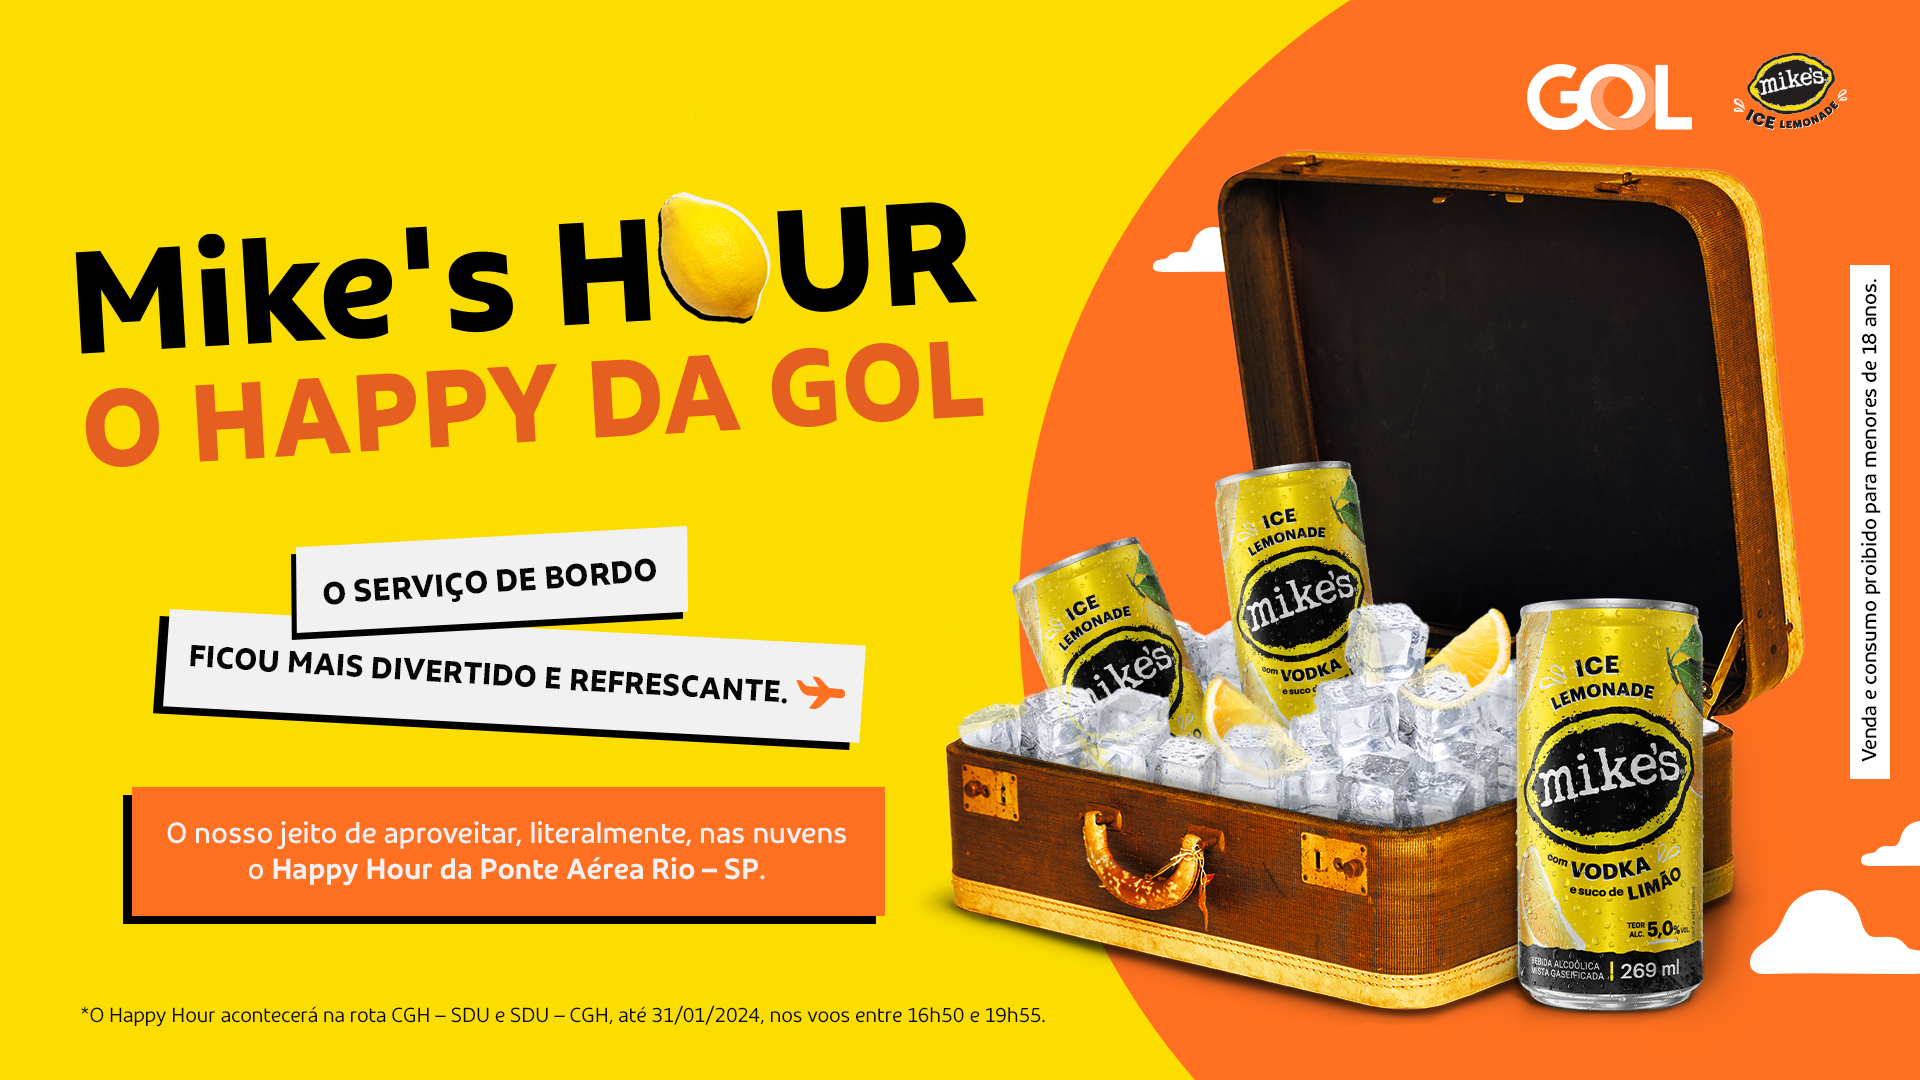 GOL e Mike’s Ice se unem para promover “happy hour” a bordo entre dezembro e janeiro